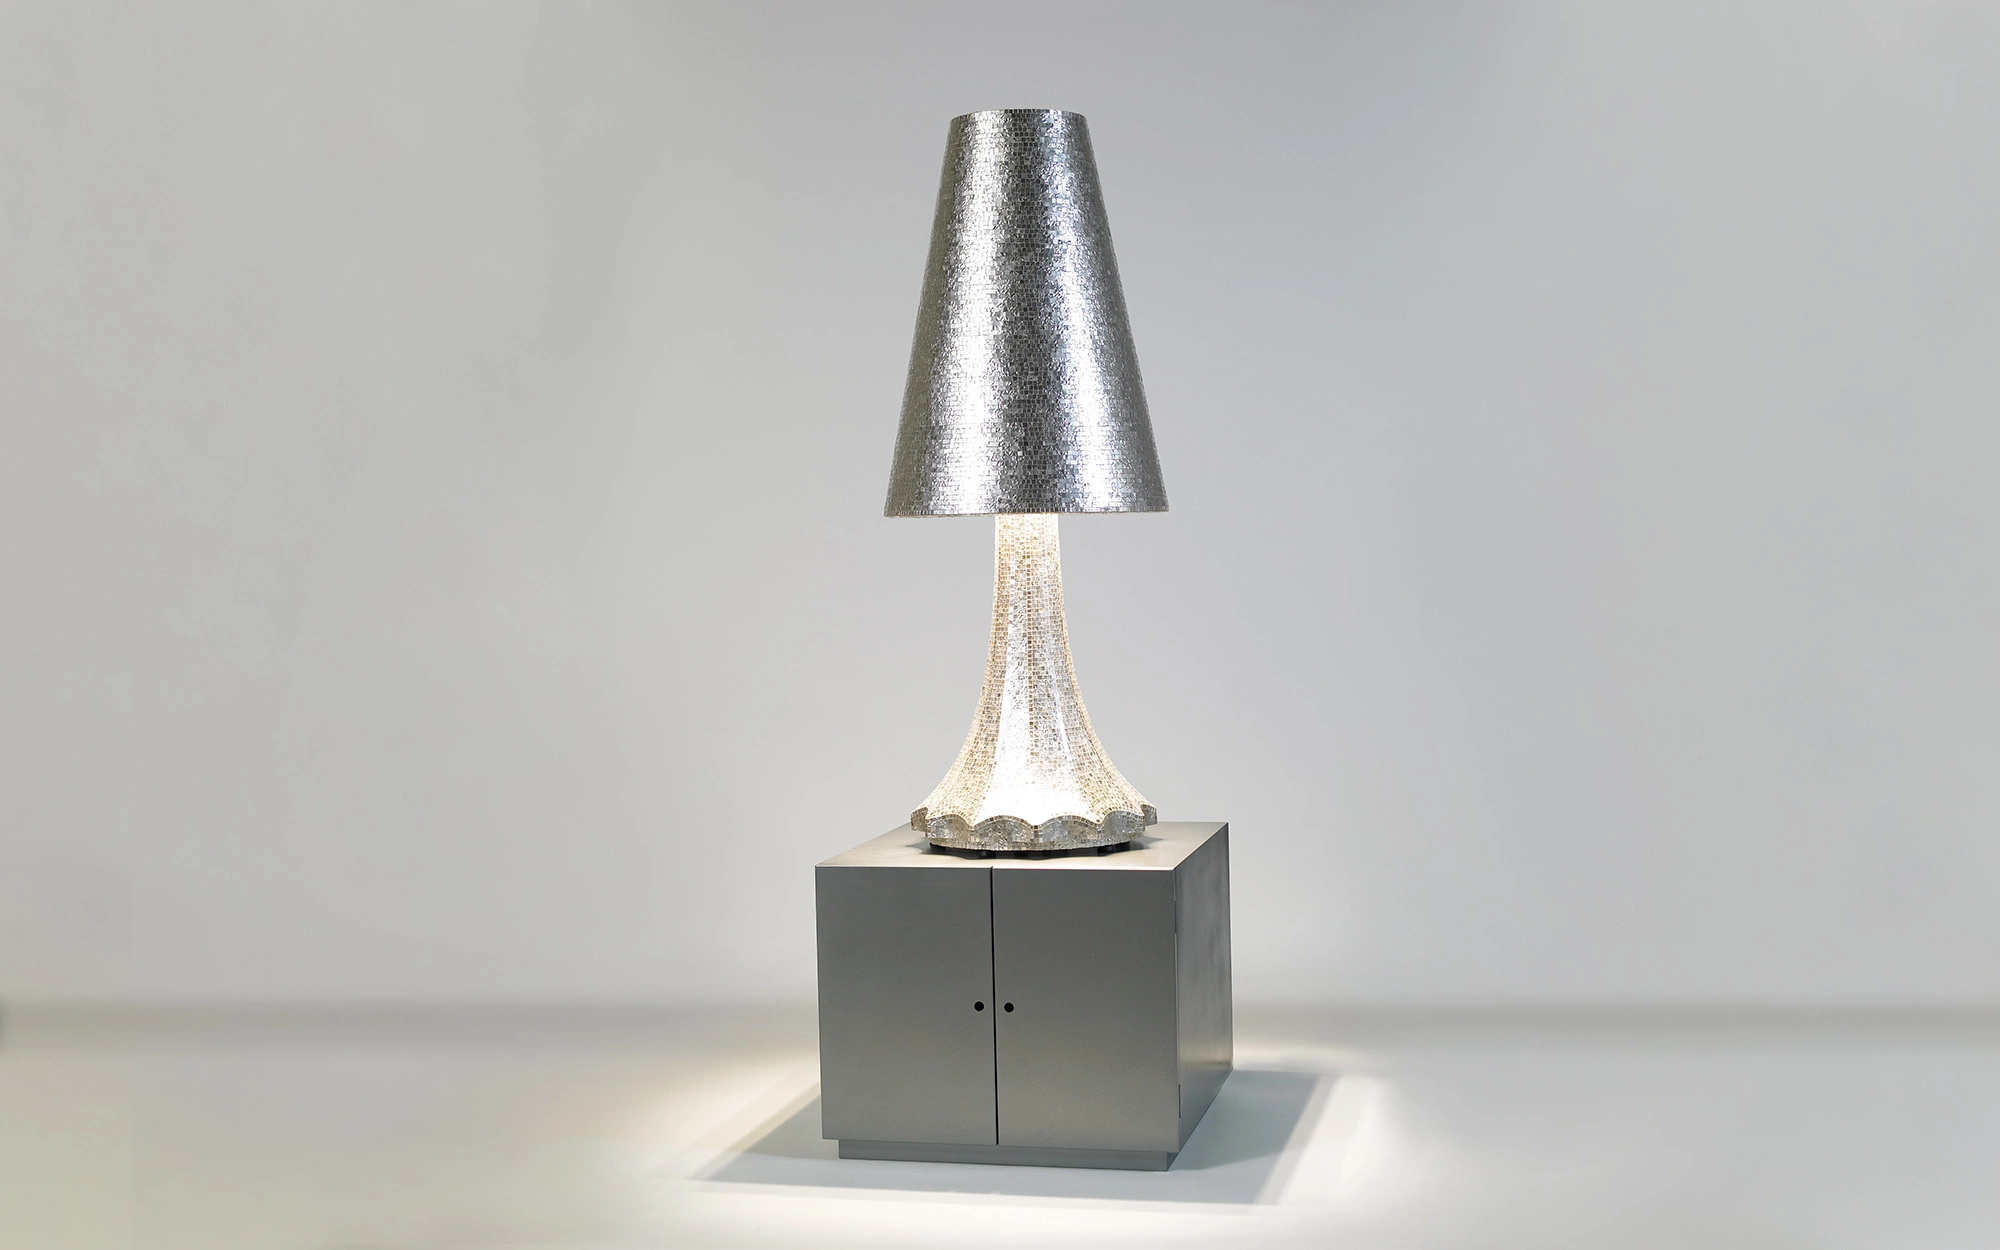 Lampada white gold - Alessandro Mendini - floor-light miscellaneous- Galerie kreo